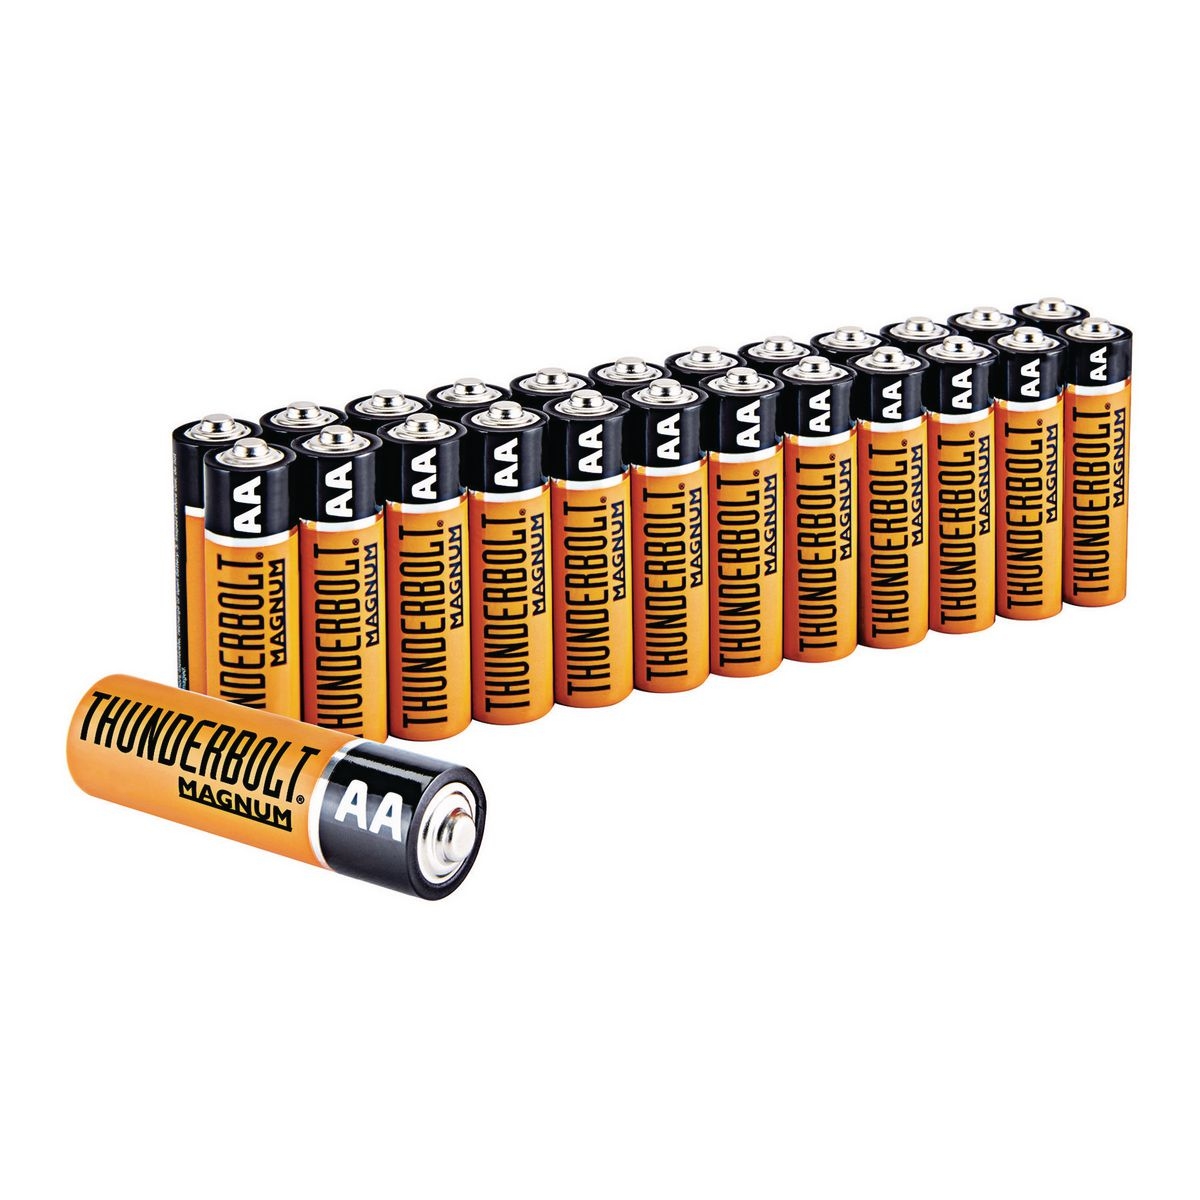 THUNDERBOLT Alkaline Batteries - Item 61271 / 61270 / 61272 / 61279 / 69568 / 92404 / 92405 / 92406 / 92407 / 92408